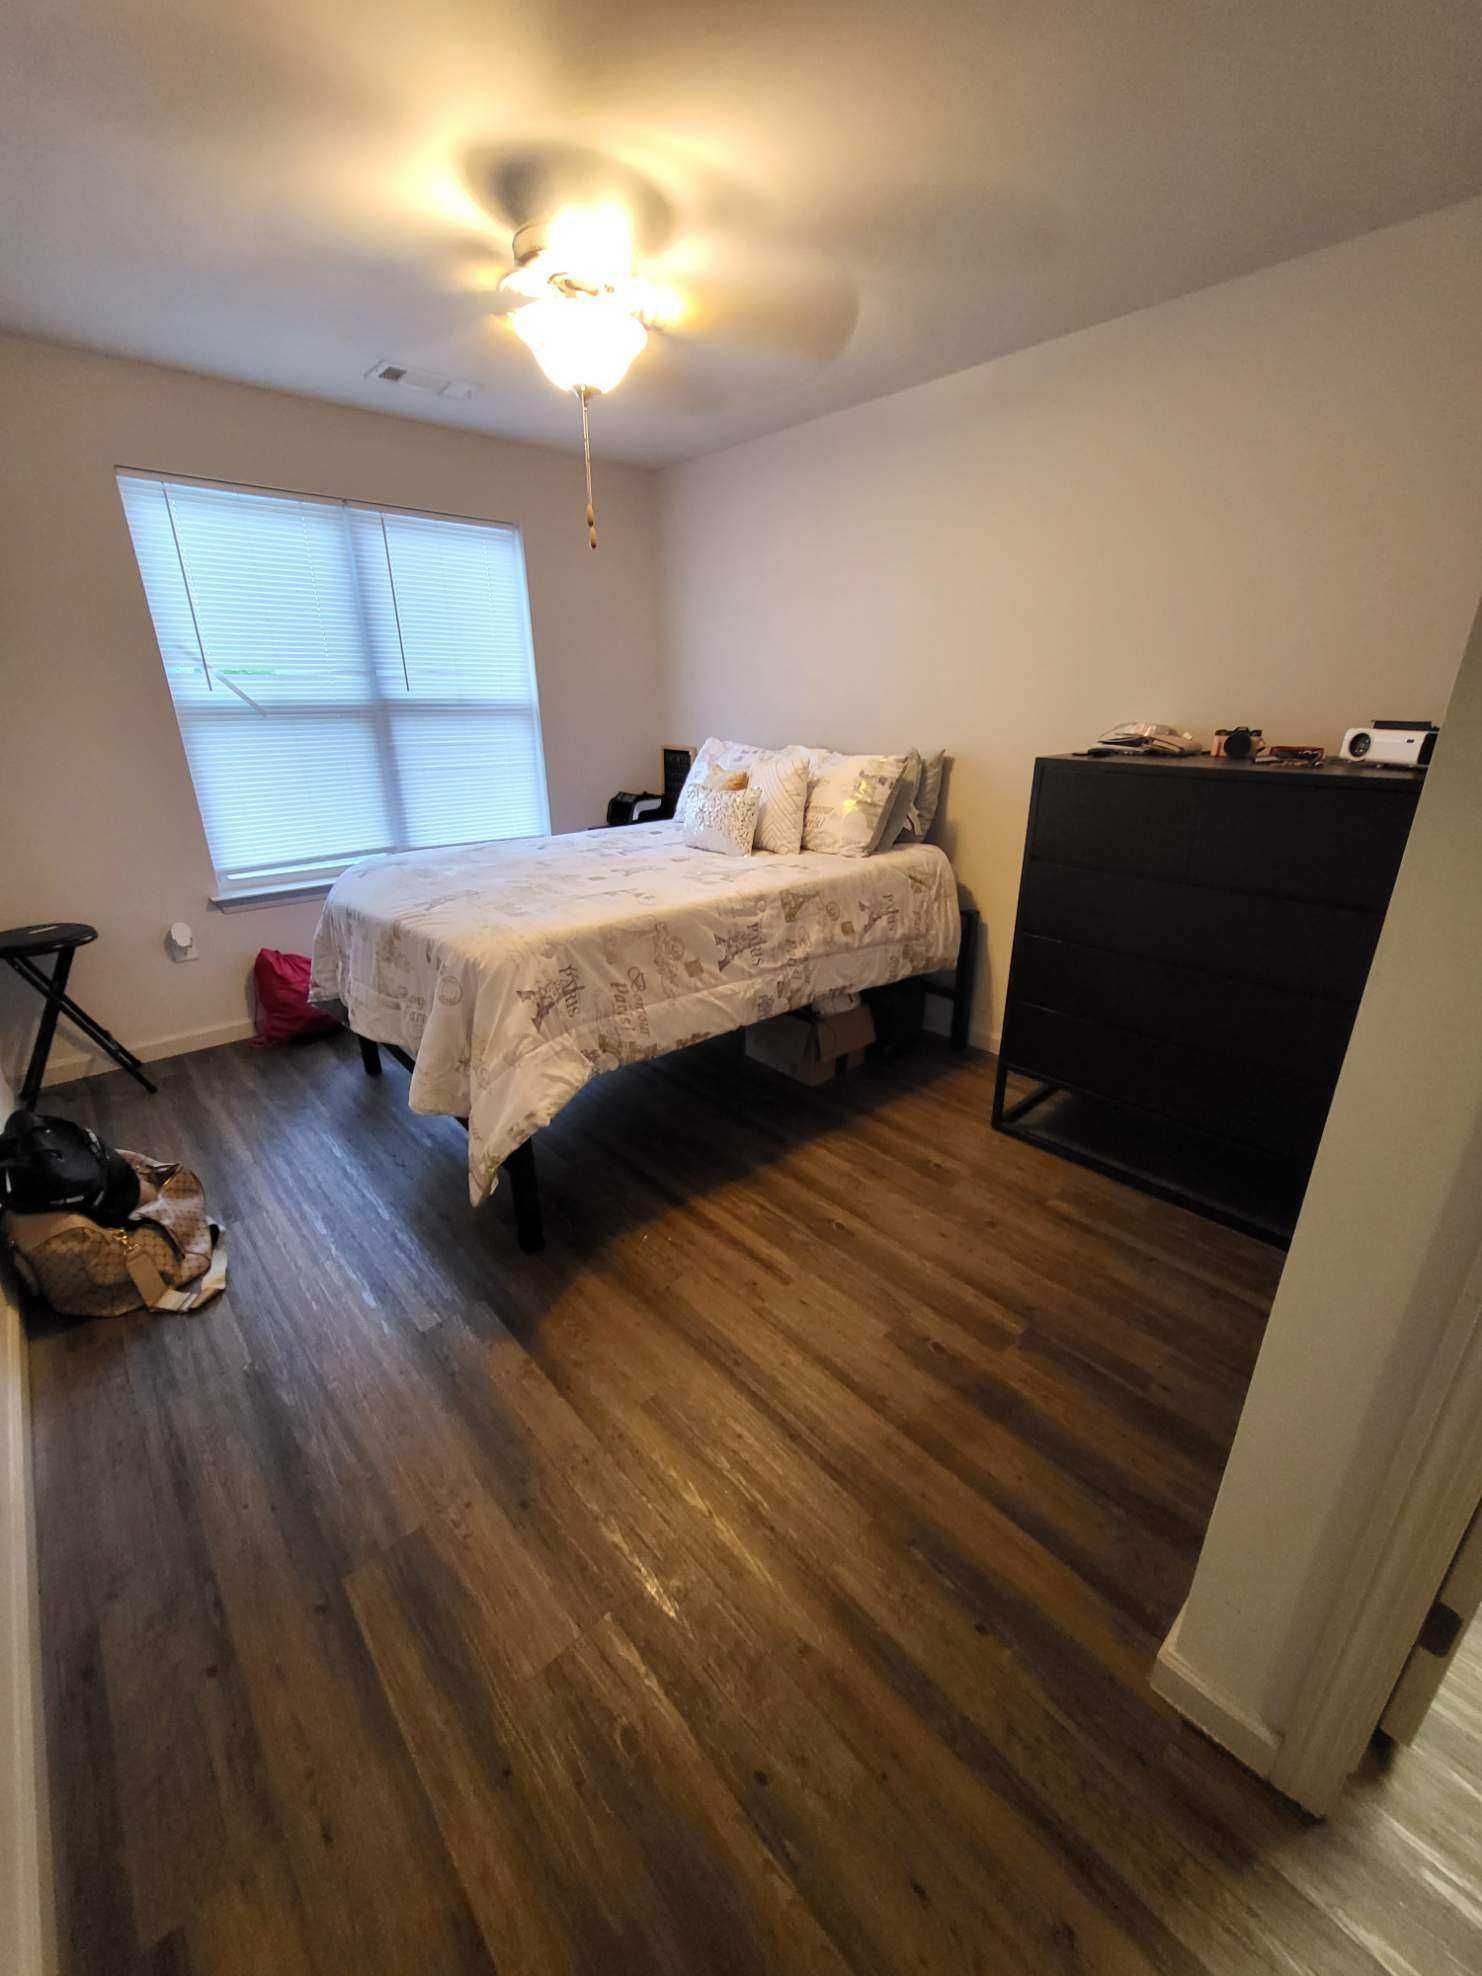 bedroom cleaned by scrub-in cleaners in statesboro ga